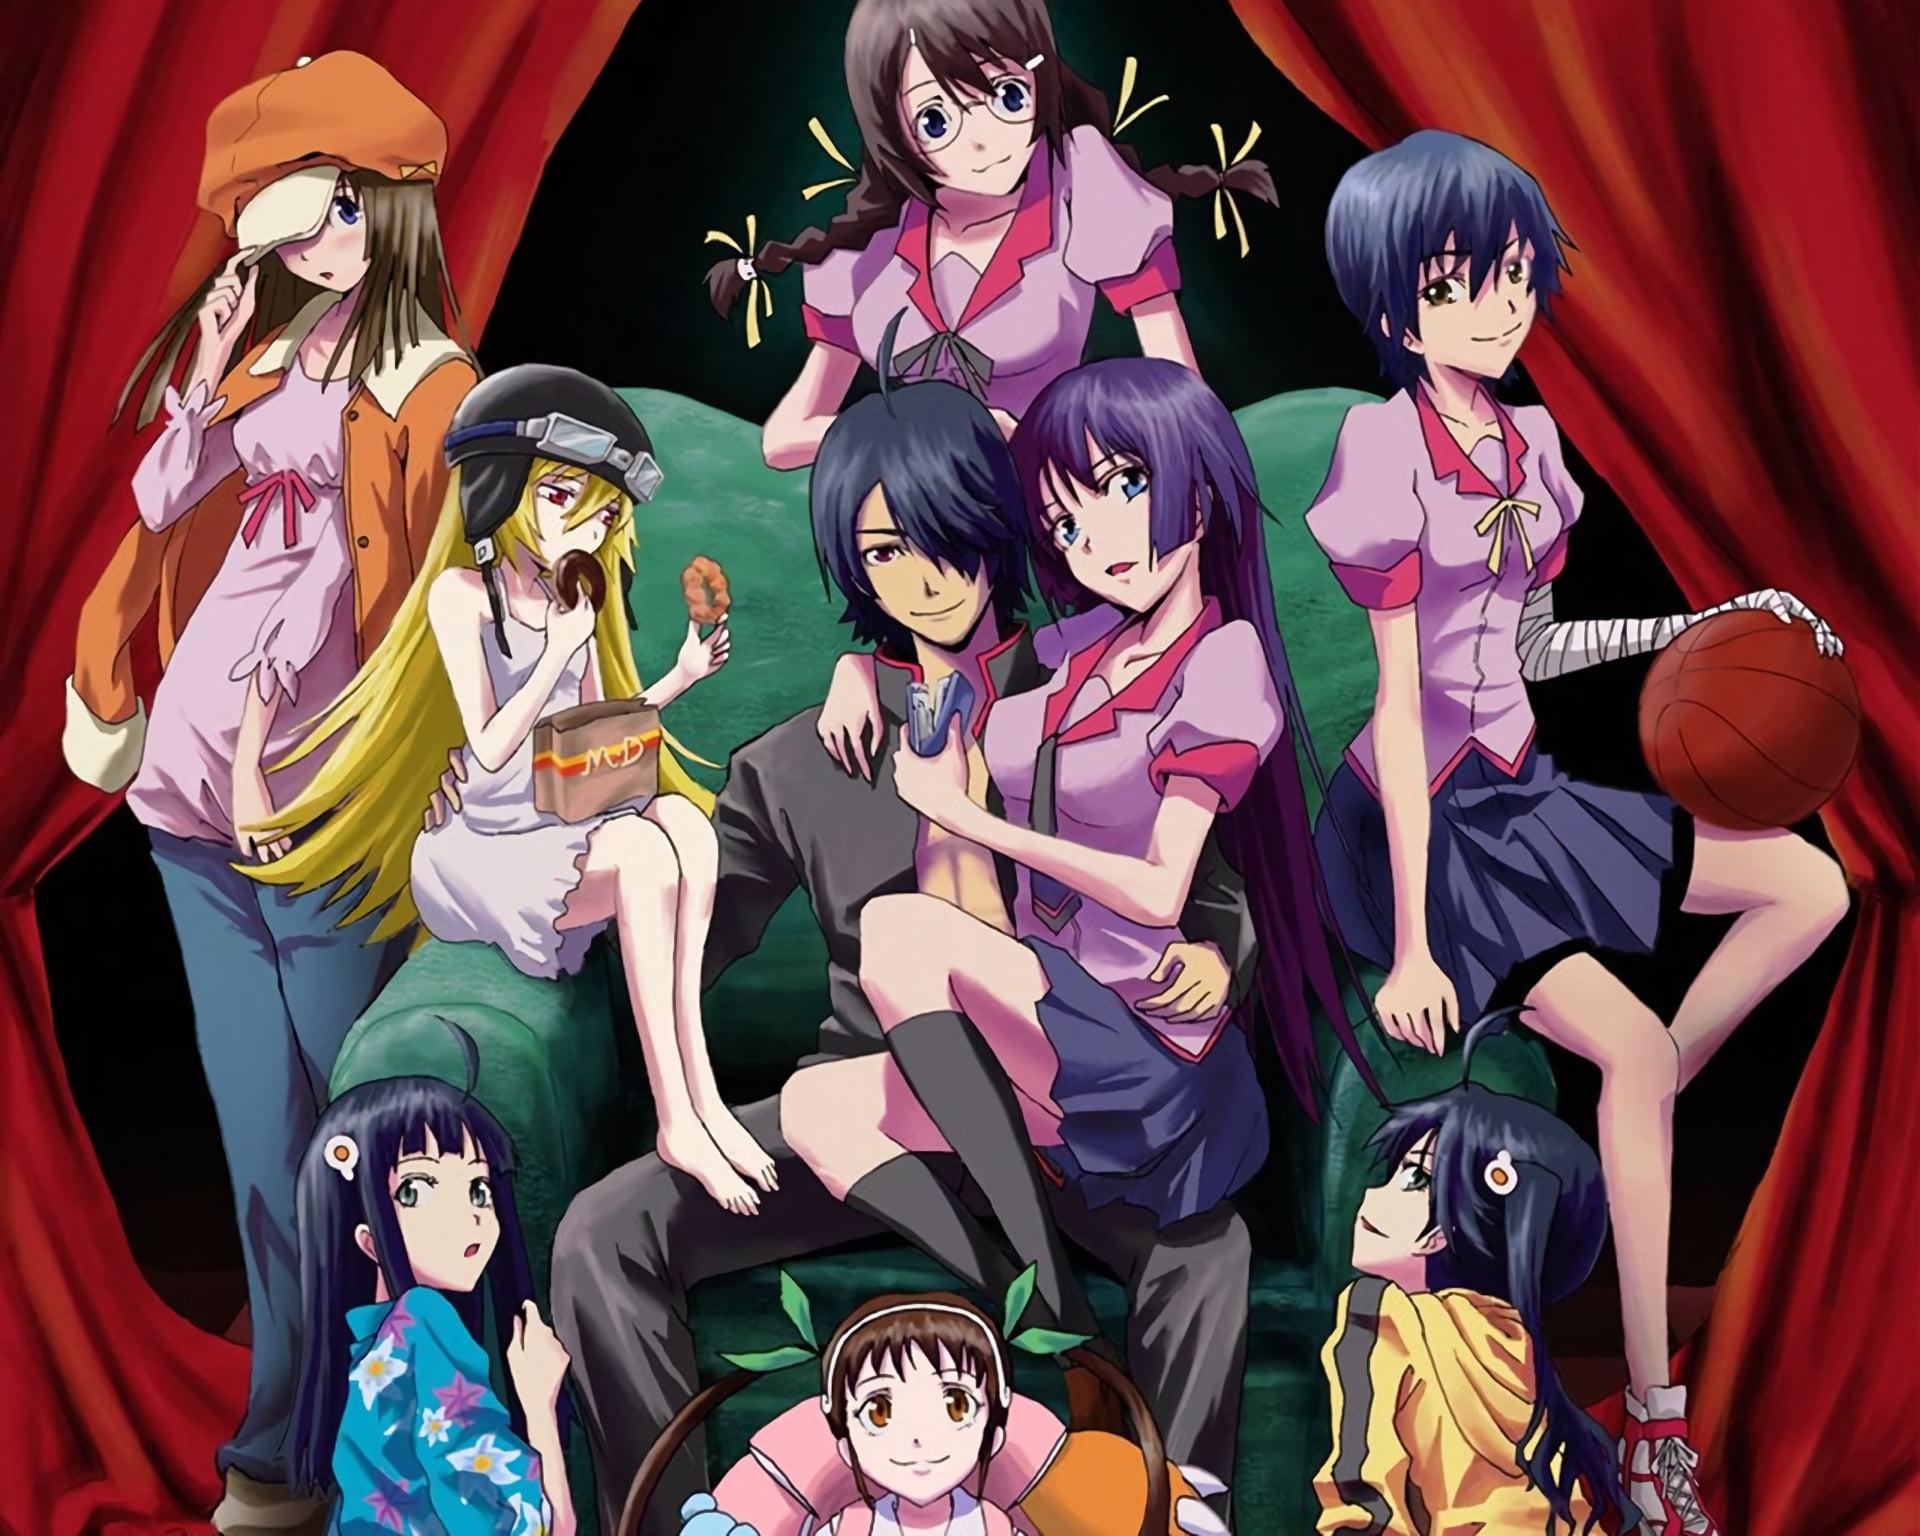 HD wallpaper: group of female anime character wallpaper, Monogatari